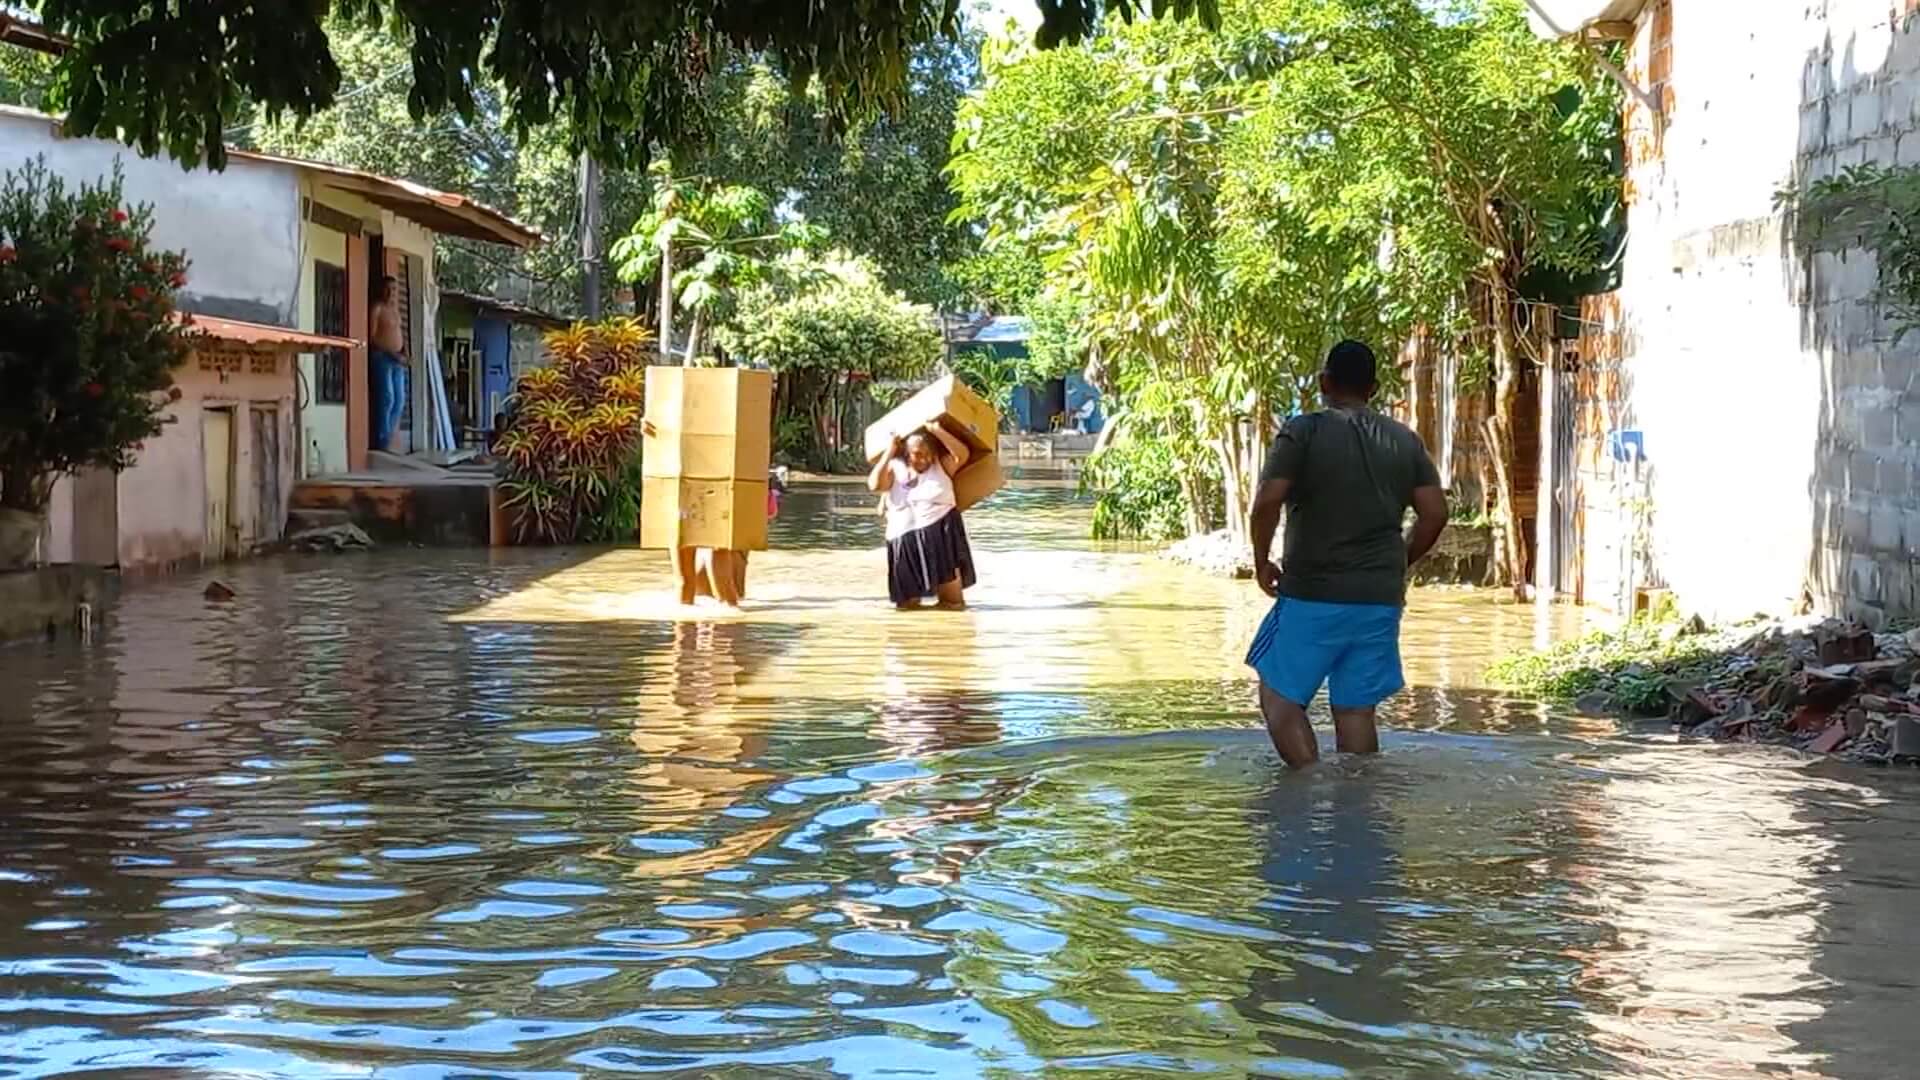 Calamidad pública en Antioquia por lluvias